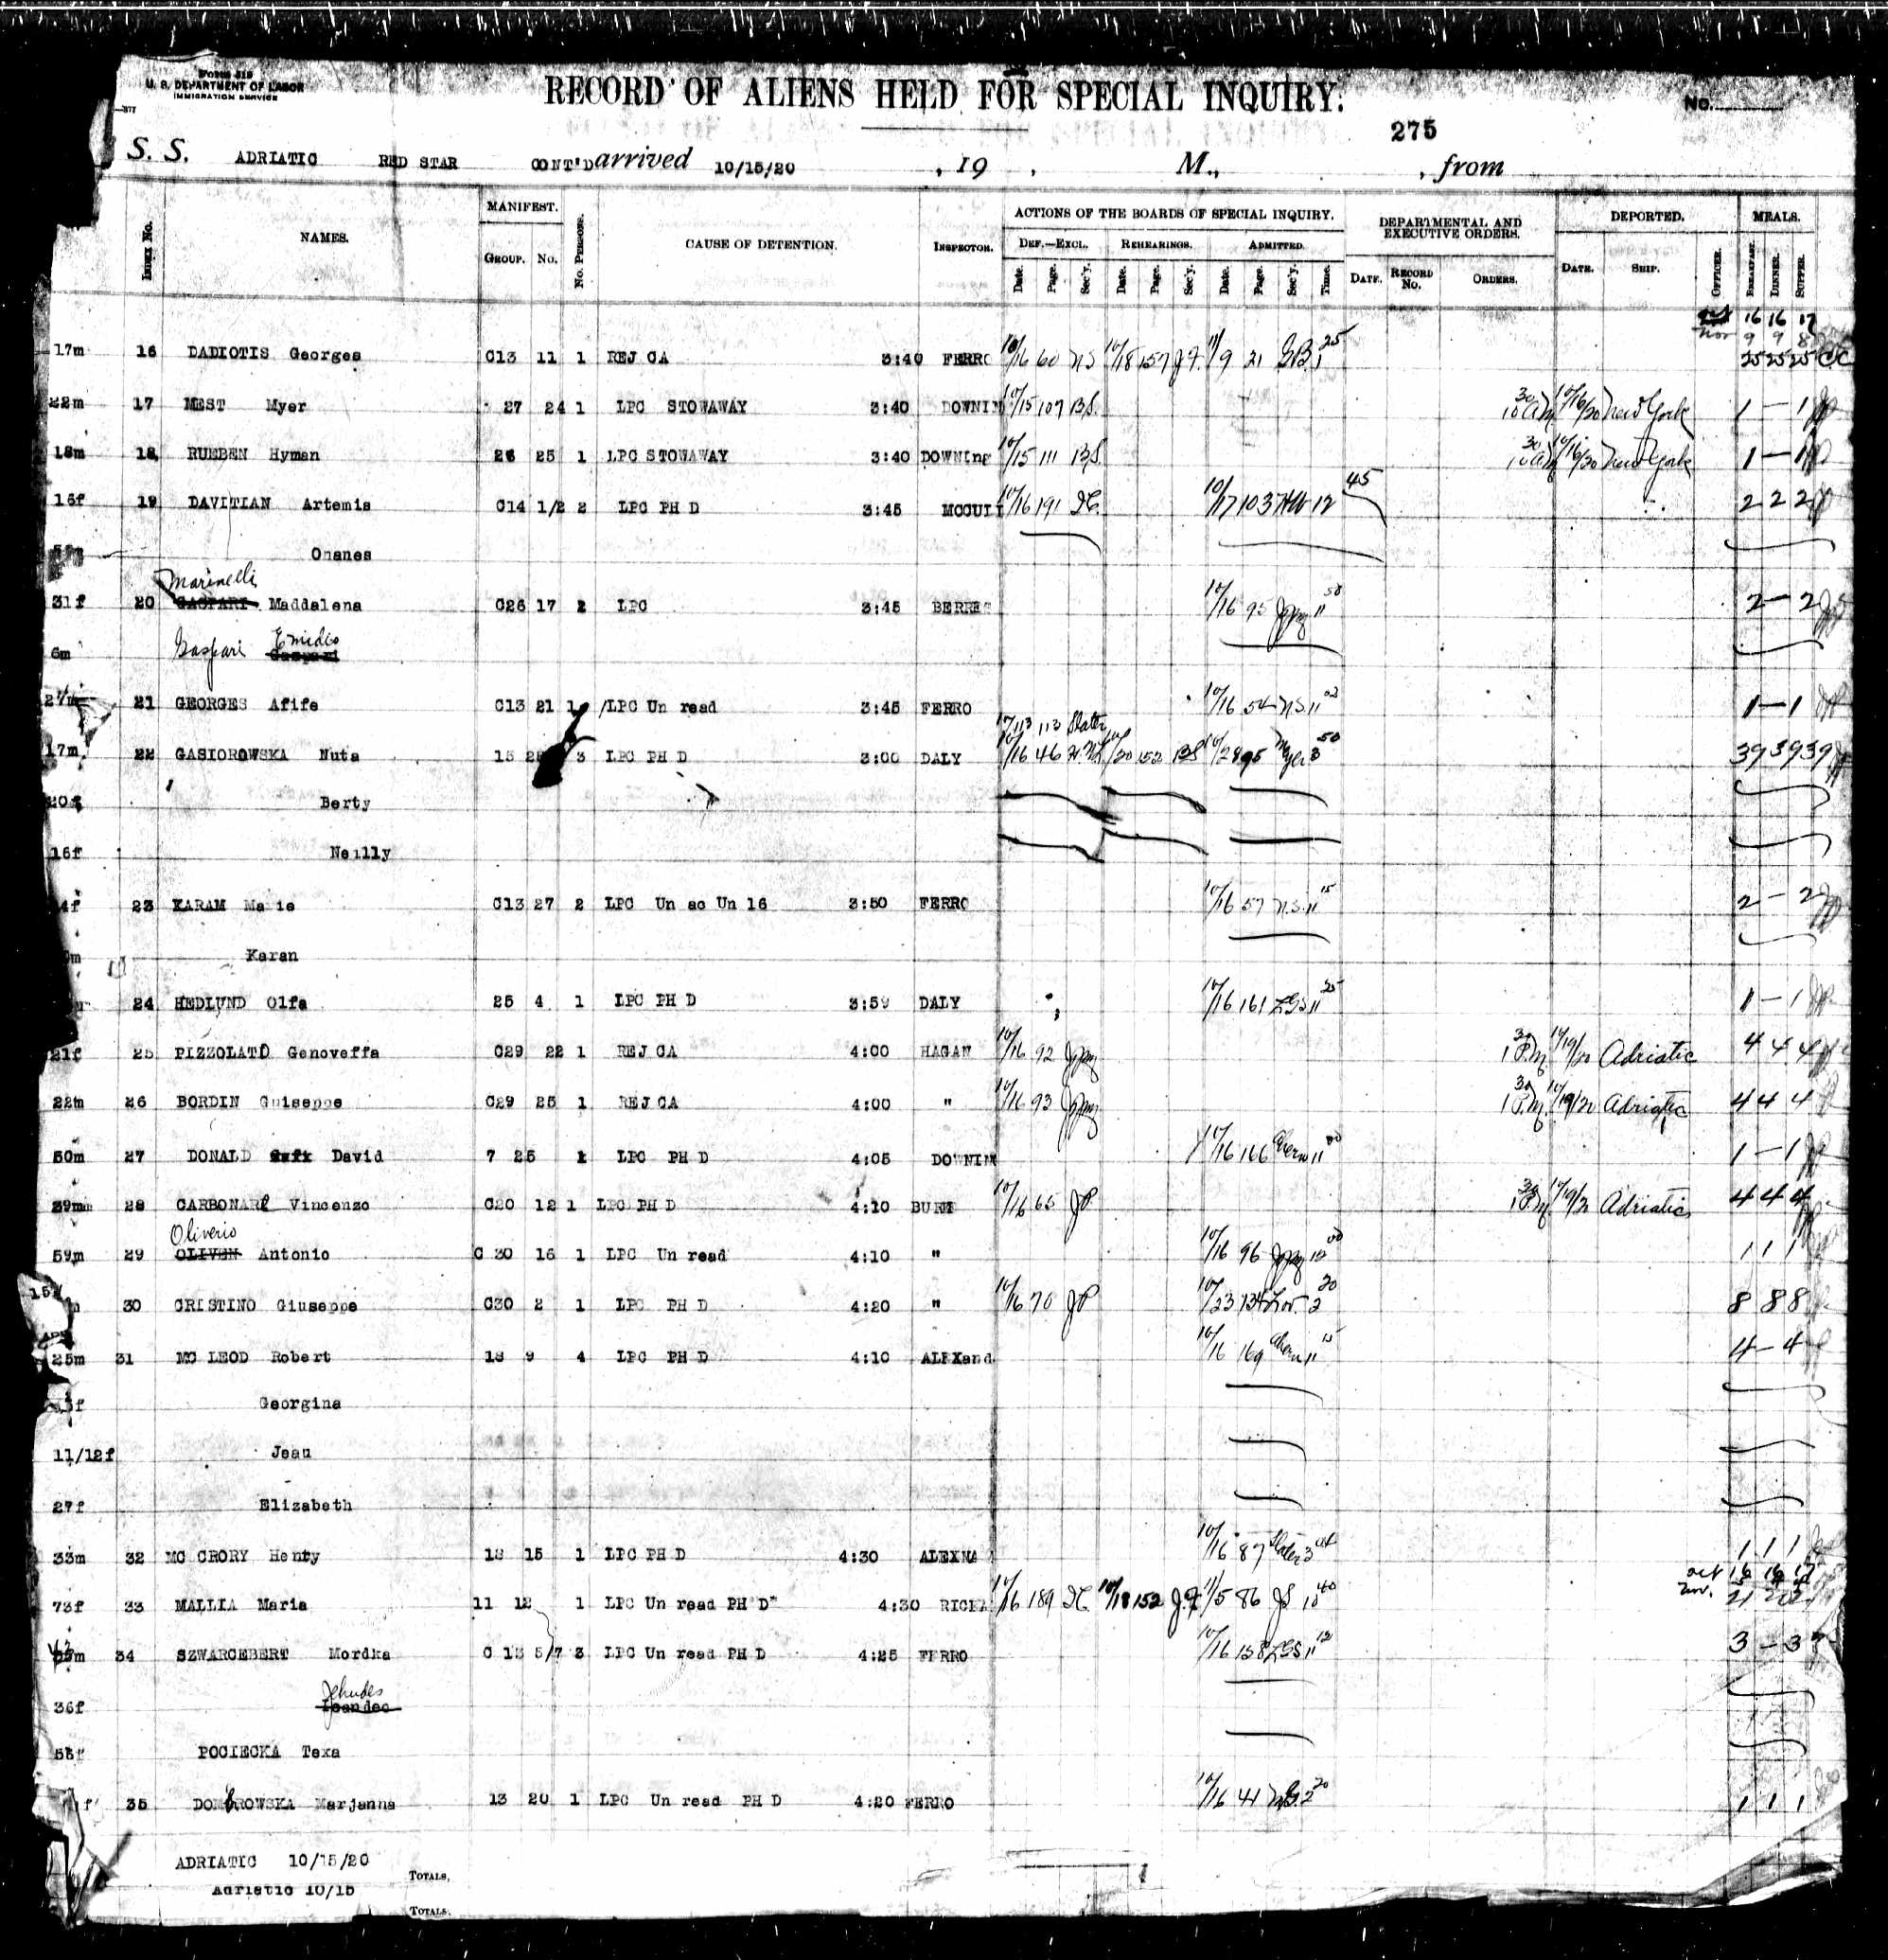 David Donald, immigration, 1920, New York -- detention sheet